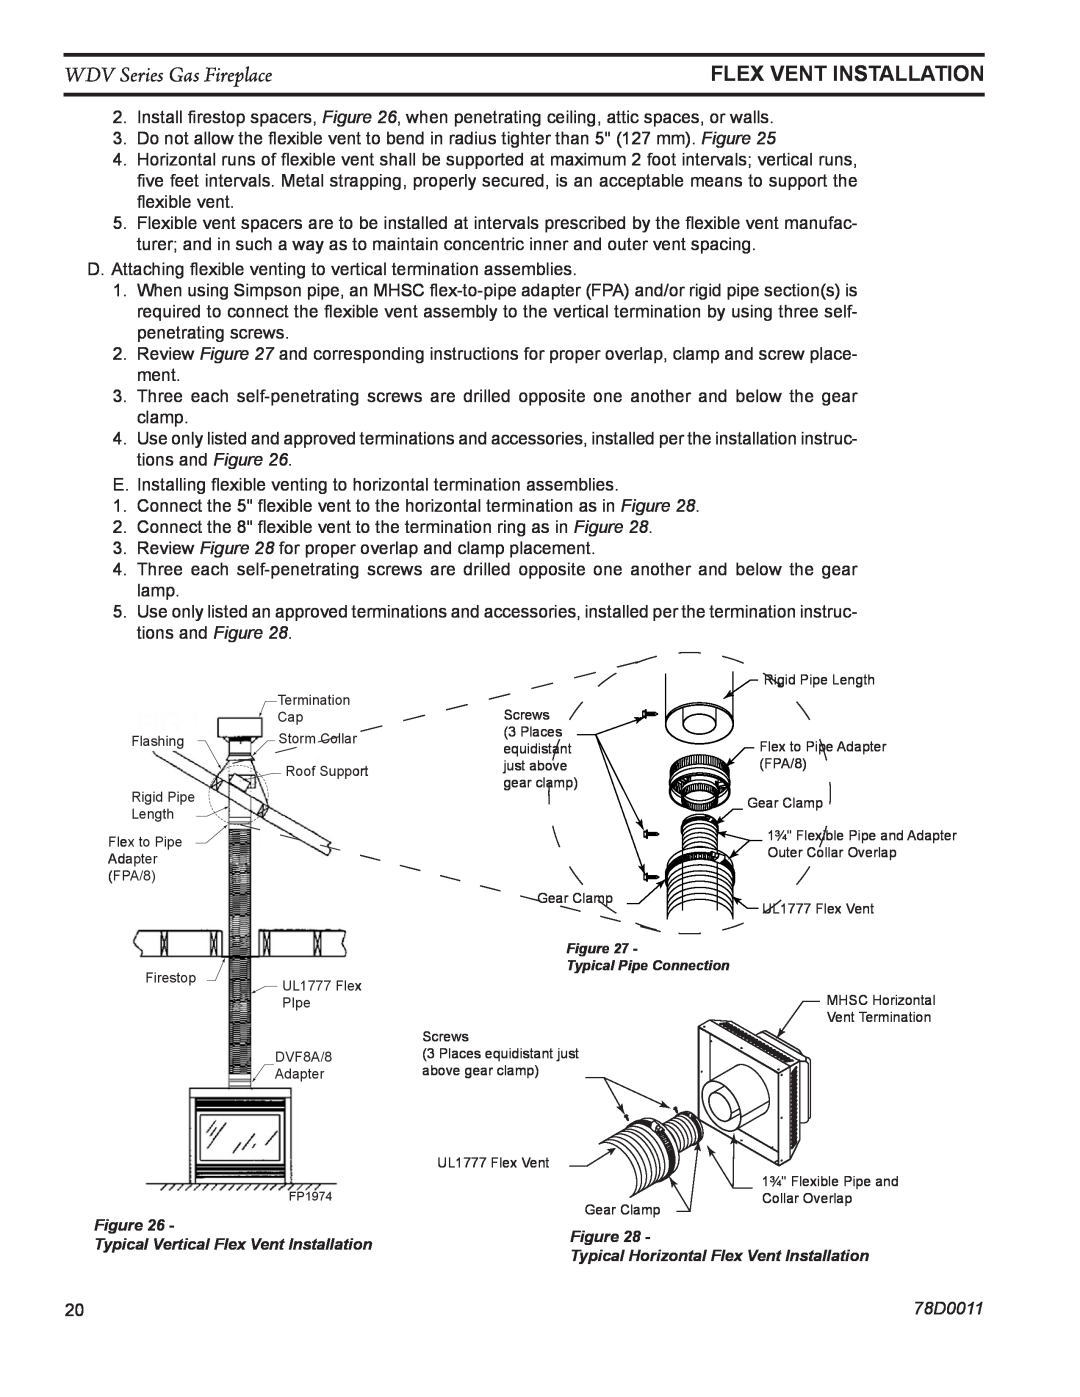 Monessen Hearth WDV500 manual WDV Series Gas Fireplace, Flex Vent Installation, 78D0011 